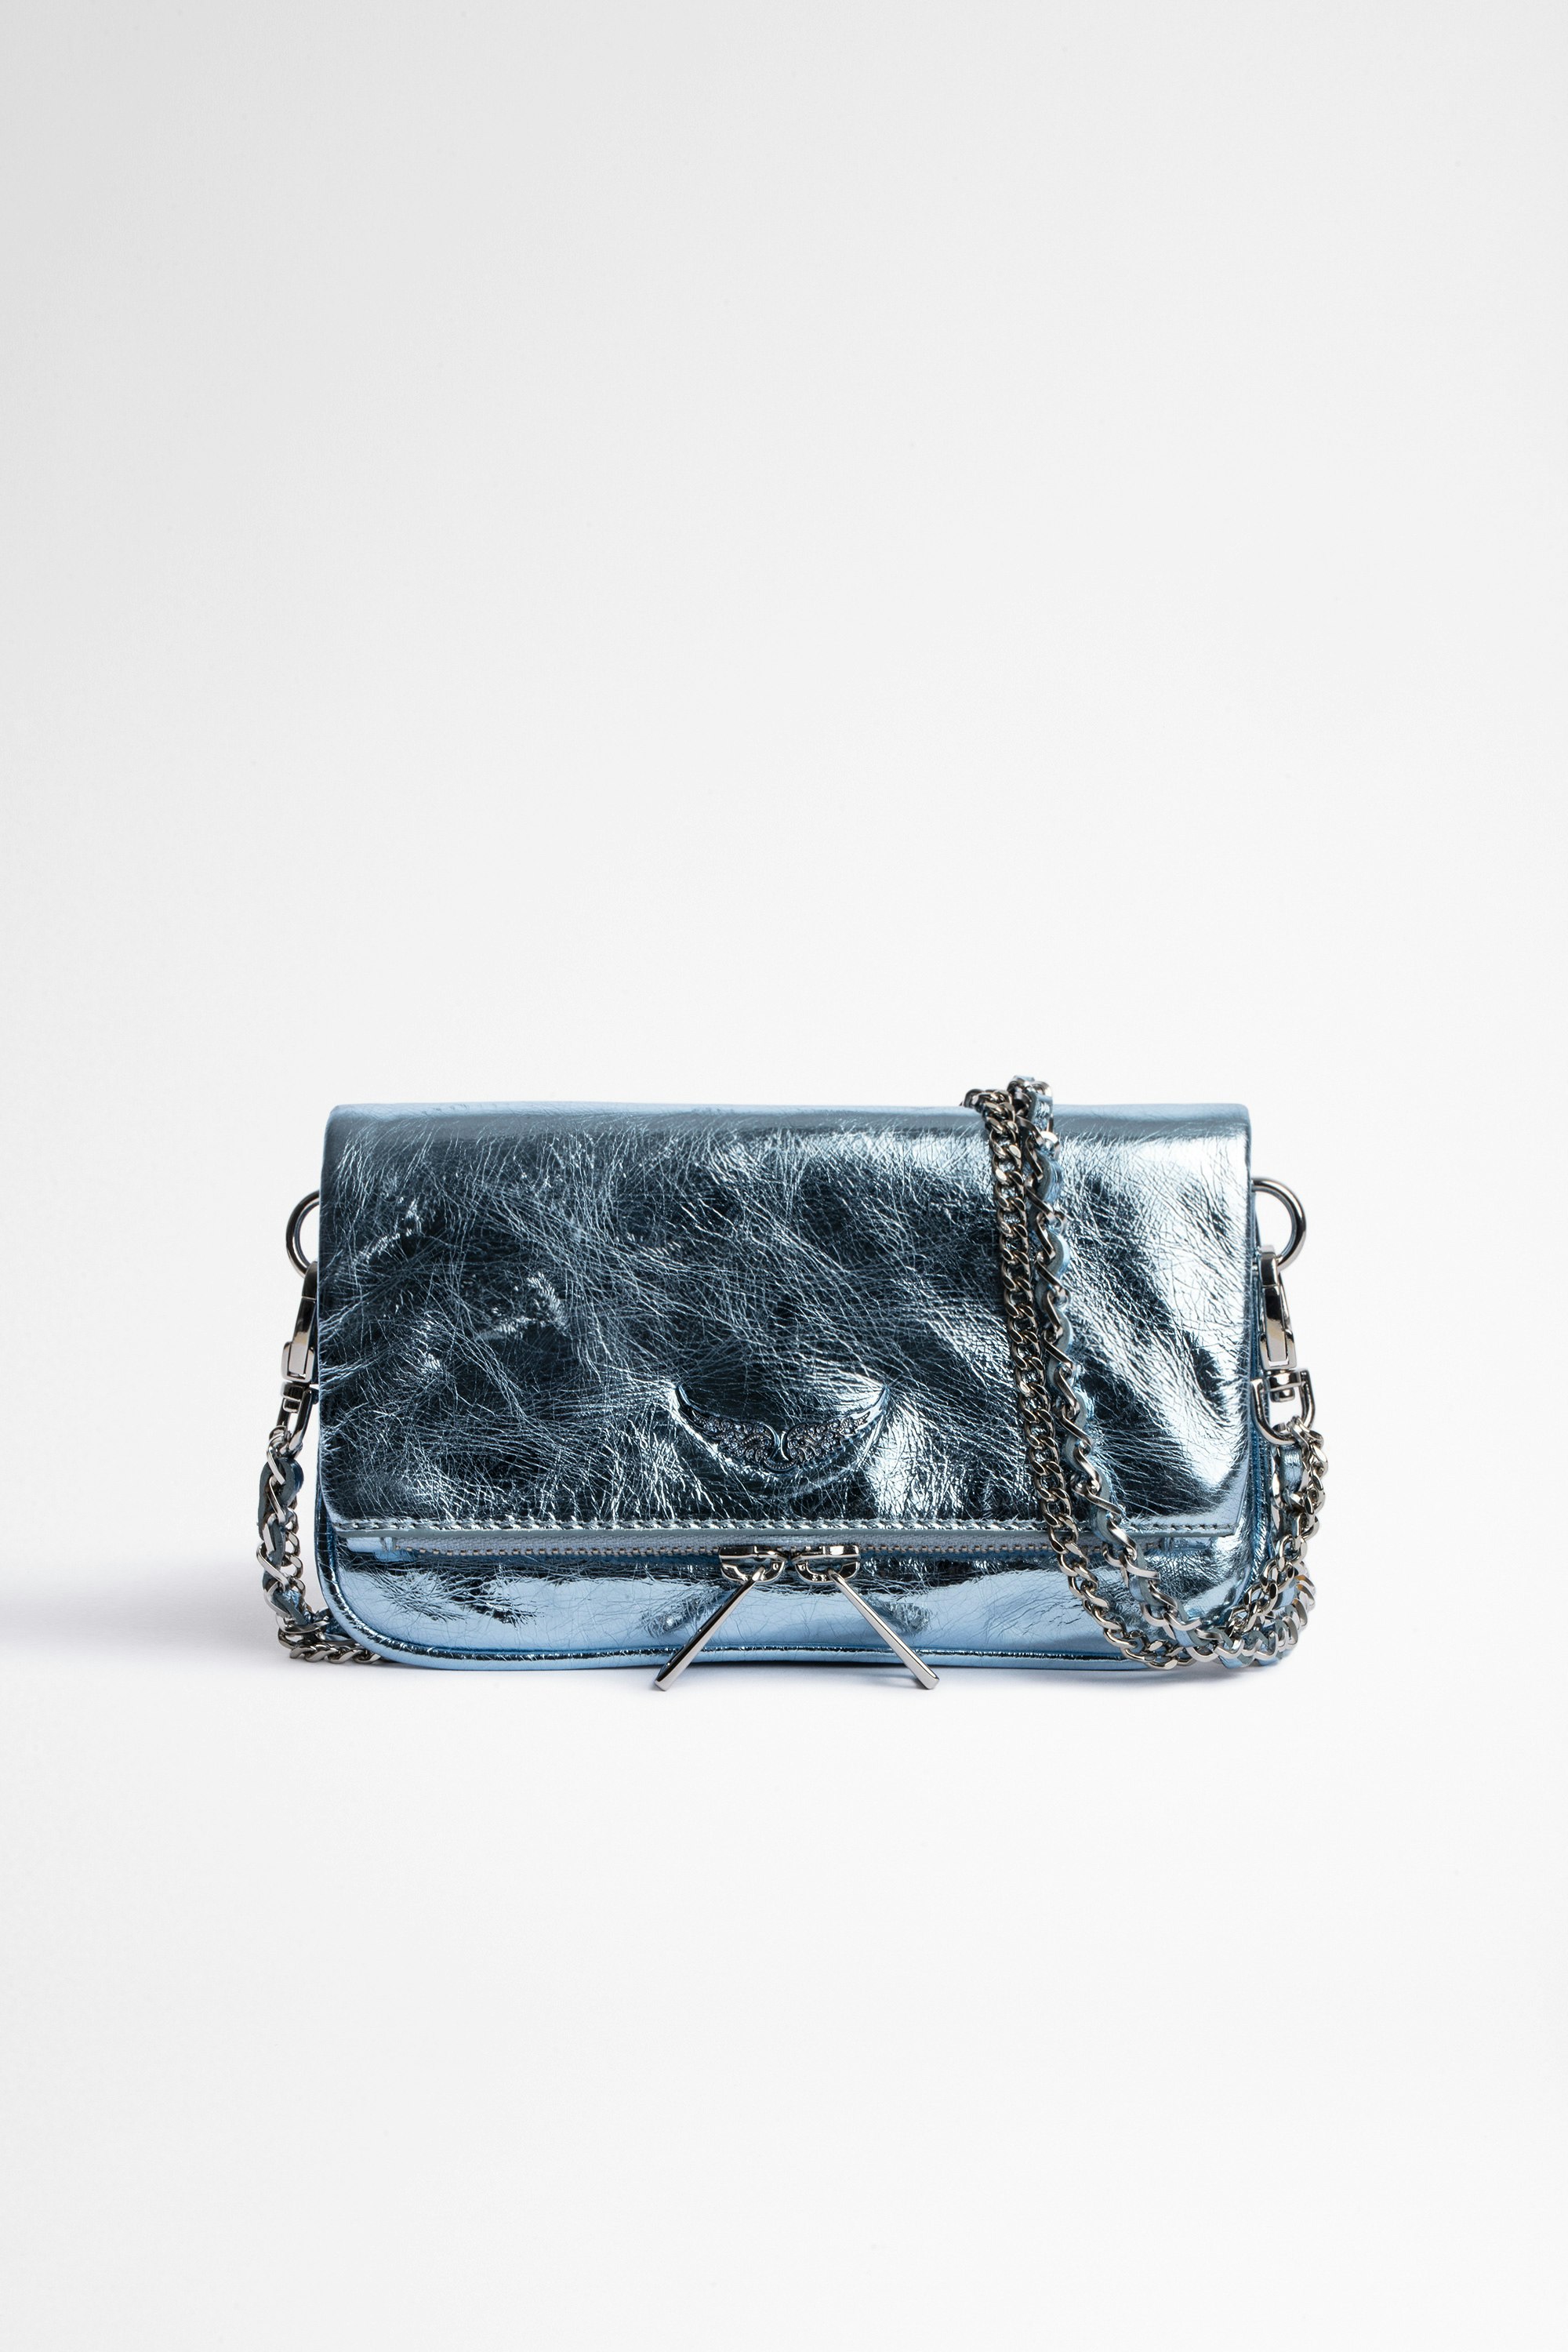 Rock Nano Clutch Women's clutch bag in metallic sky-blue leather